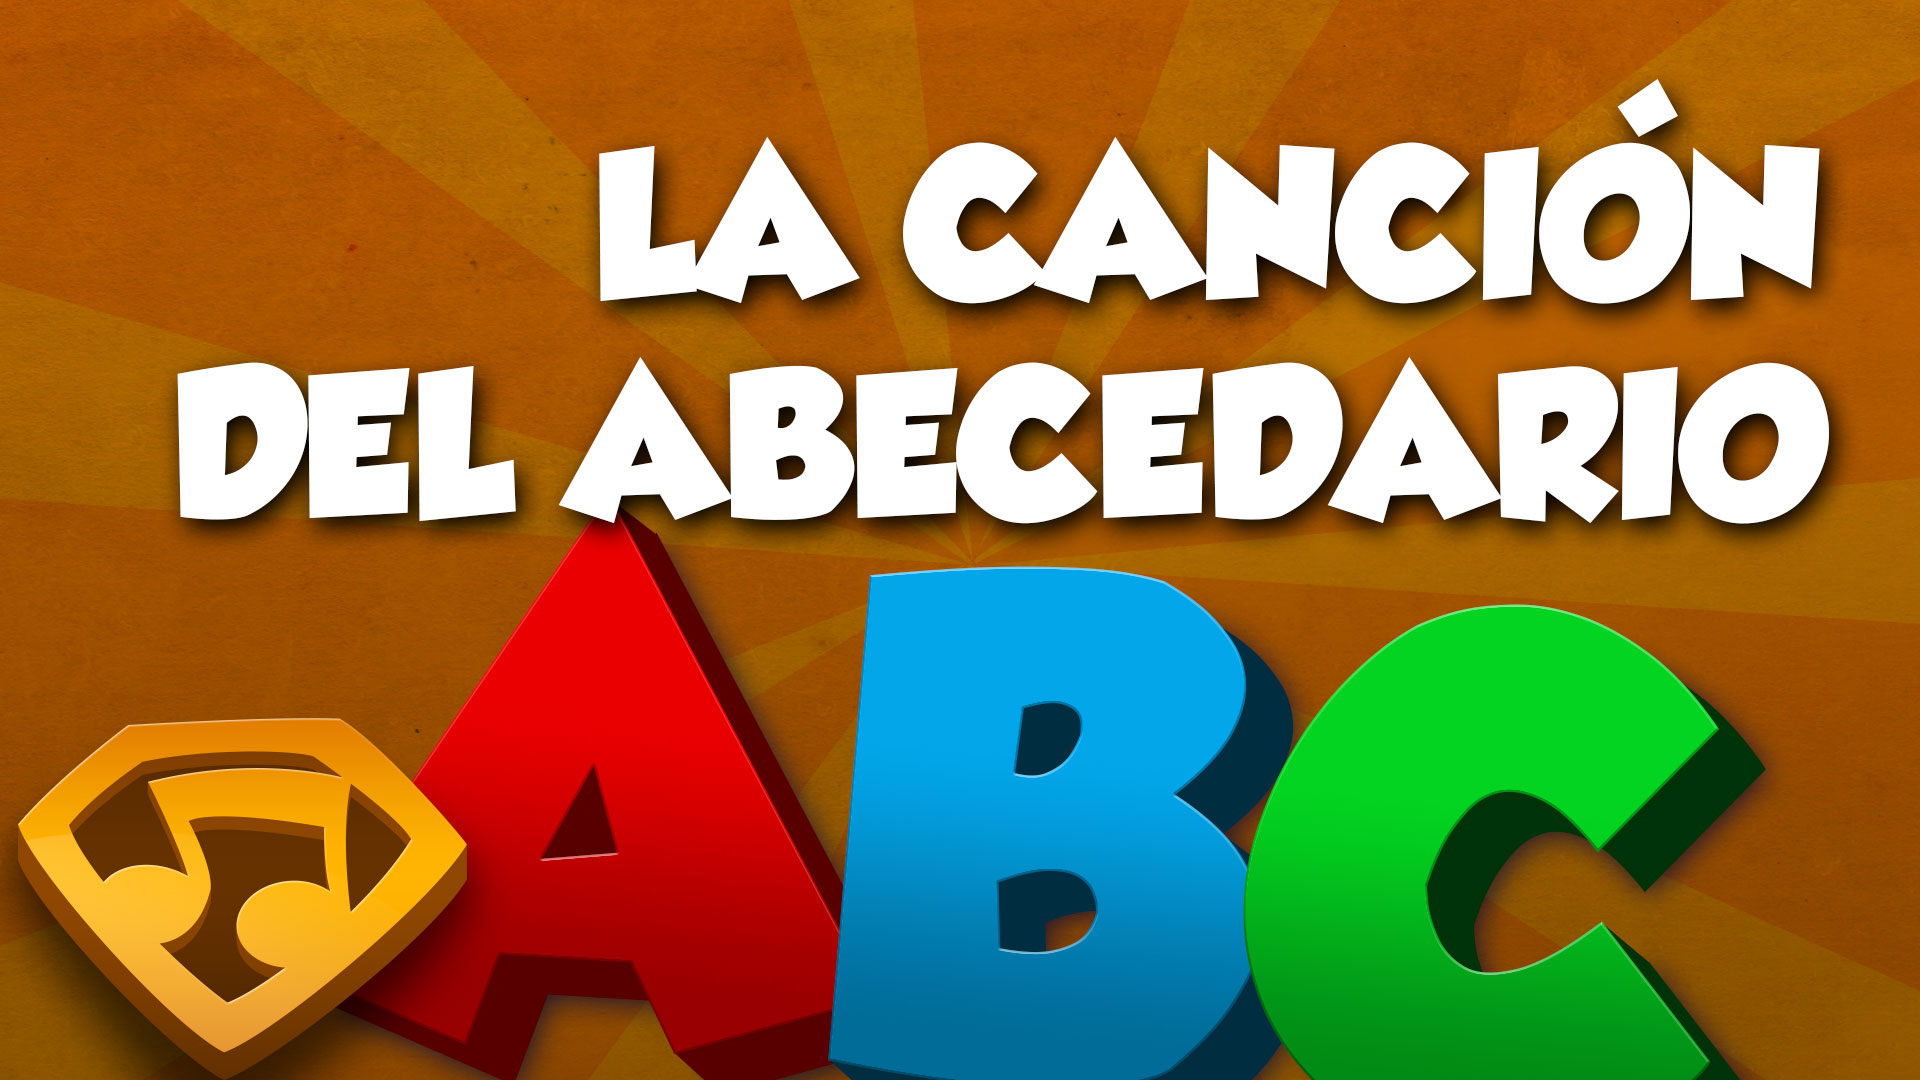 La Canción Del Abecedario video thumbnail. Click to watch the video.